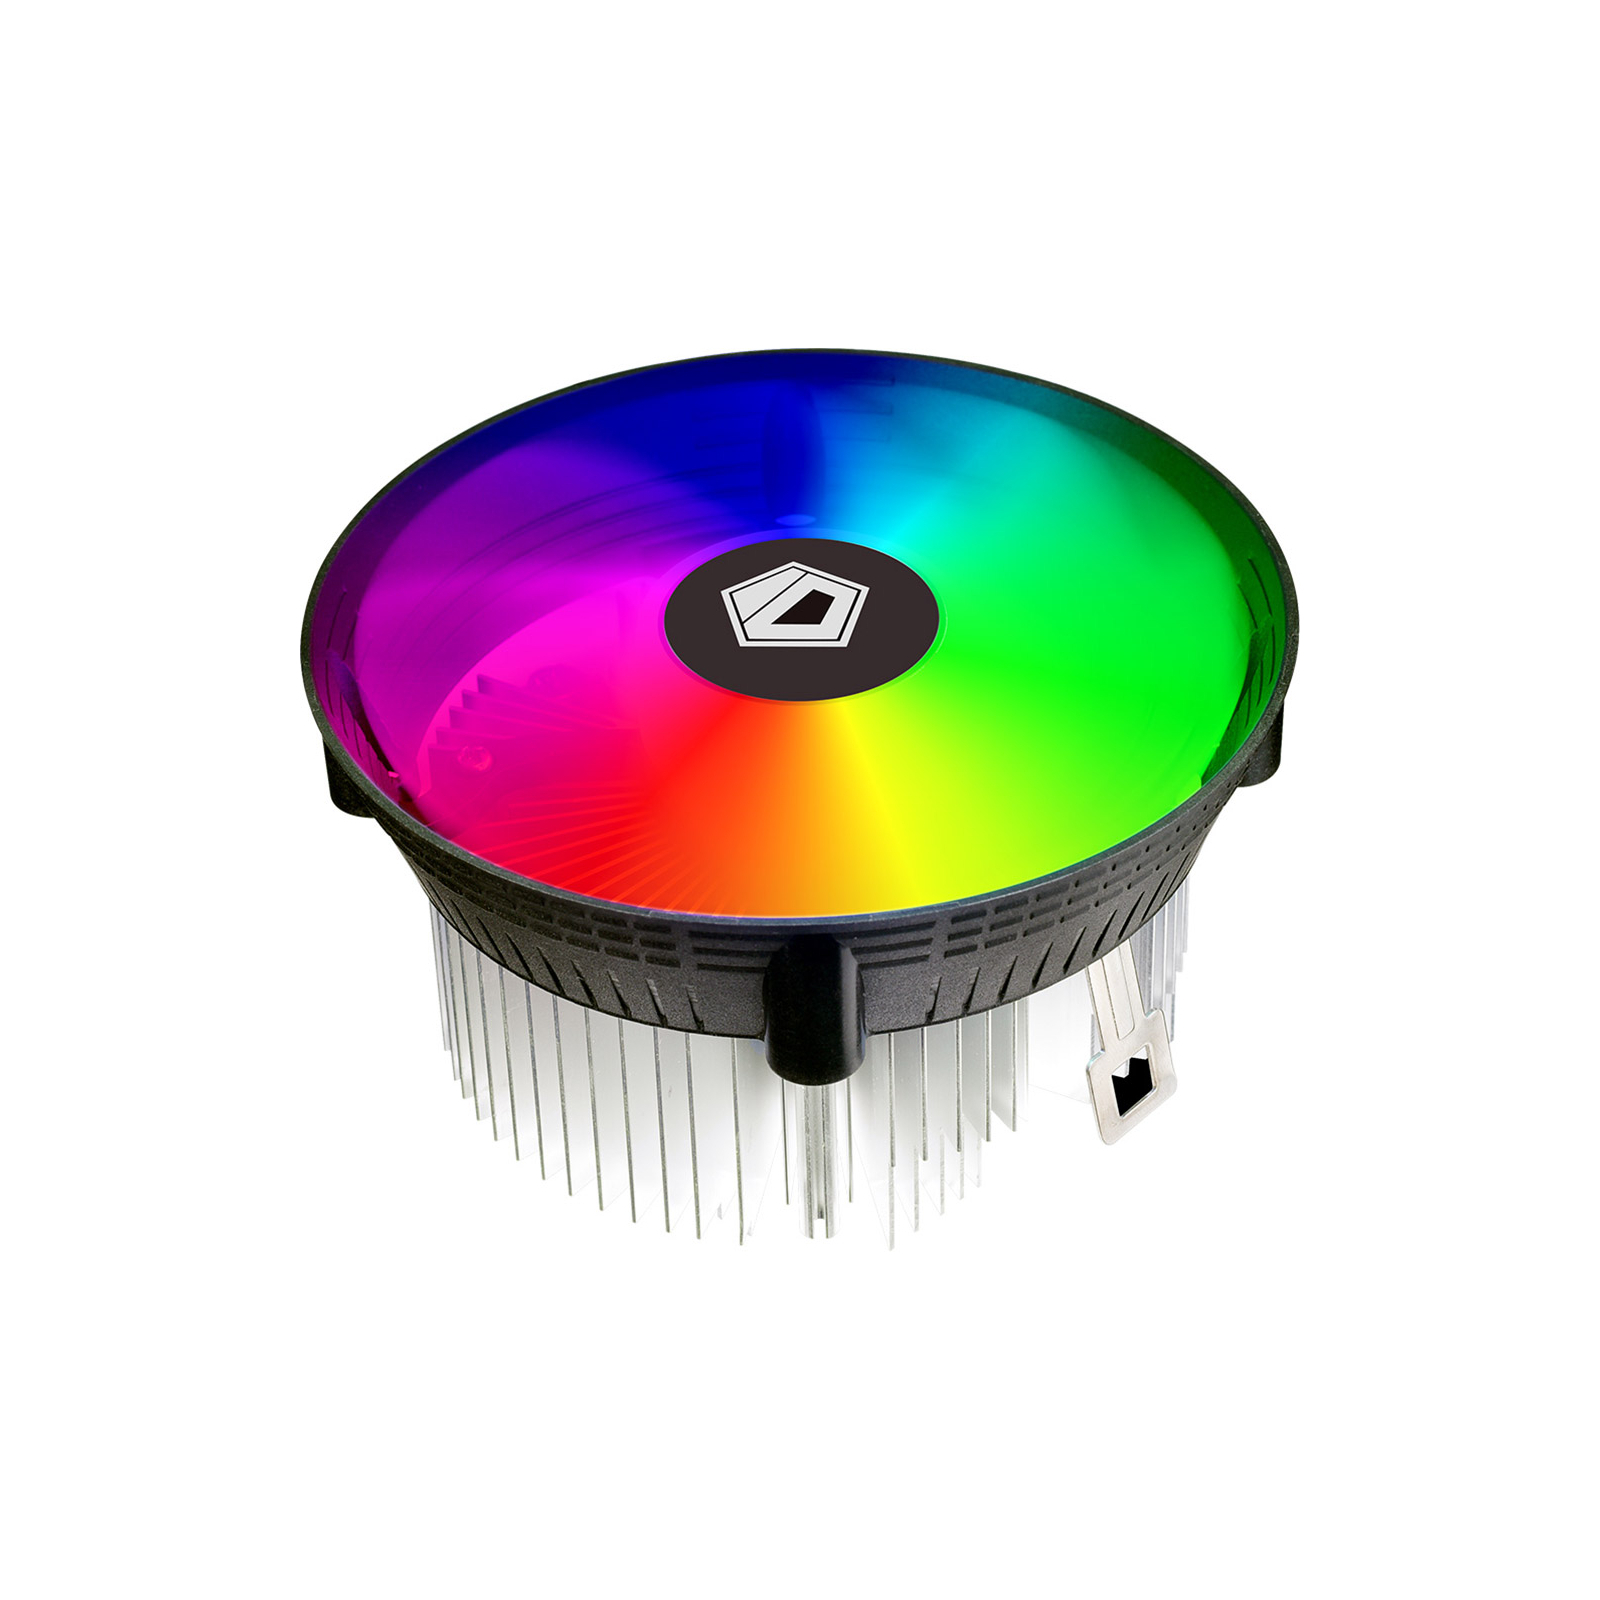 Кулер для процессора ID-Cooling DK-03A RGB PWM